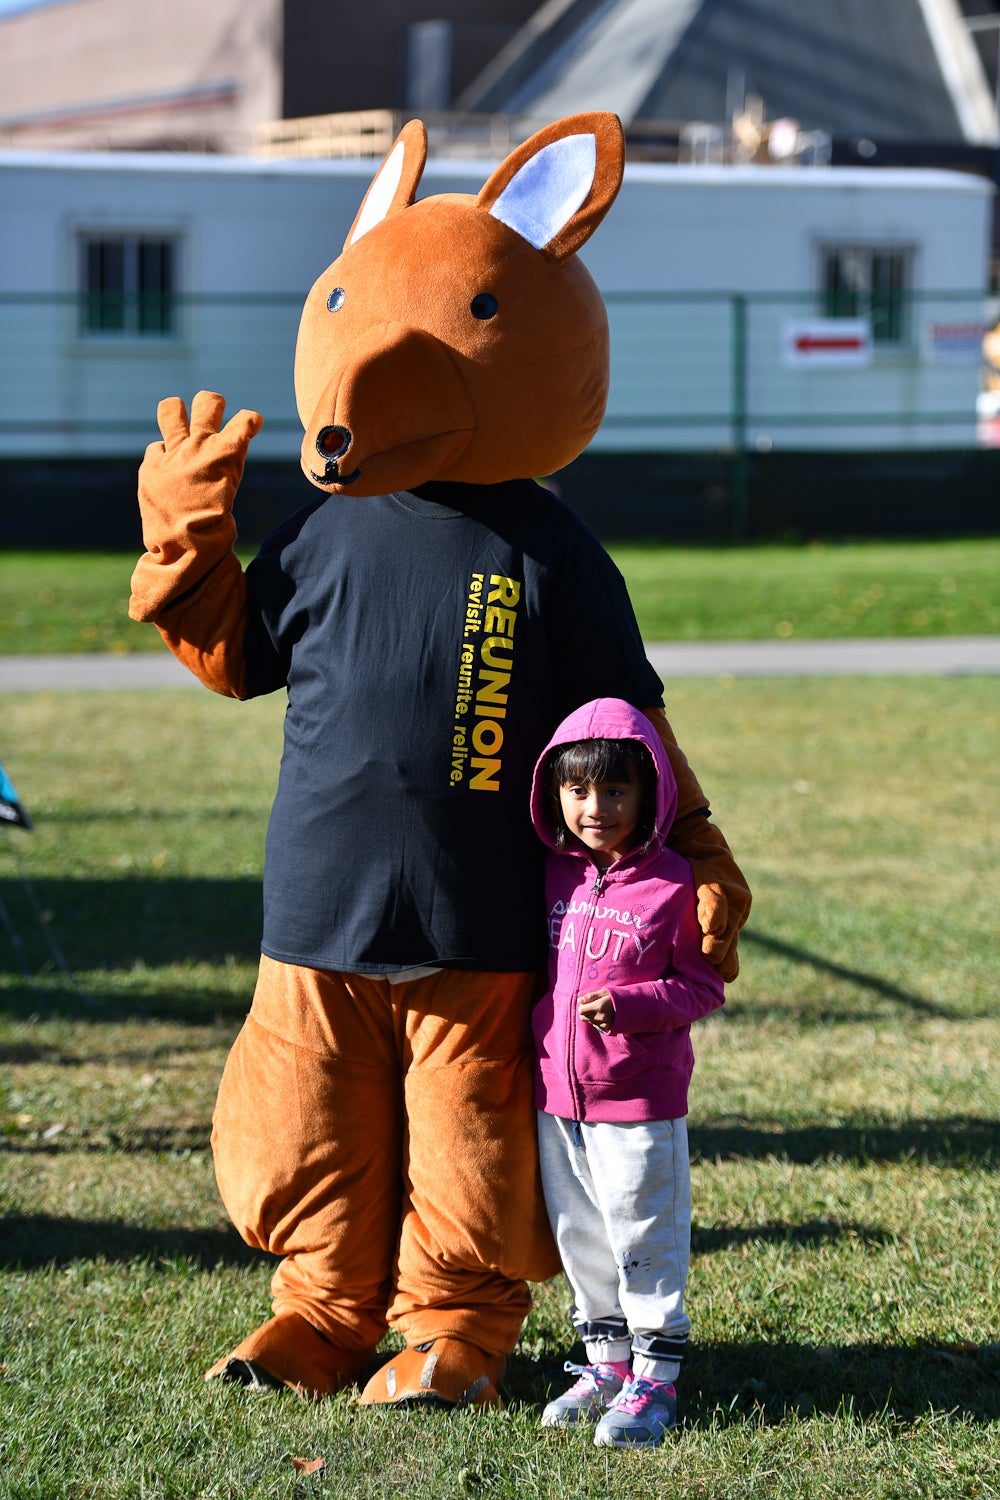 Child posing with AHSSIE, AHS' mascot